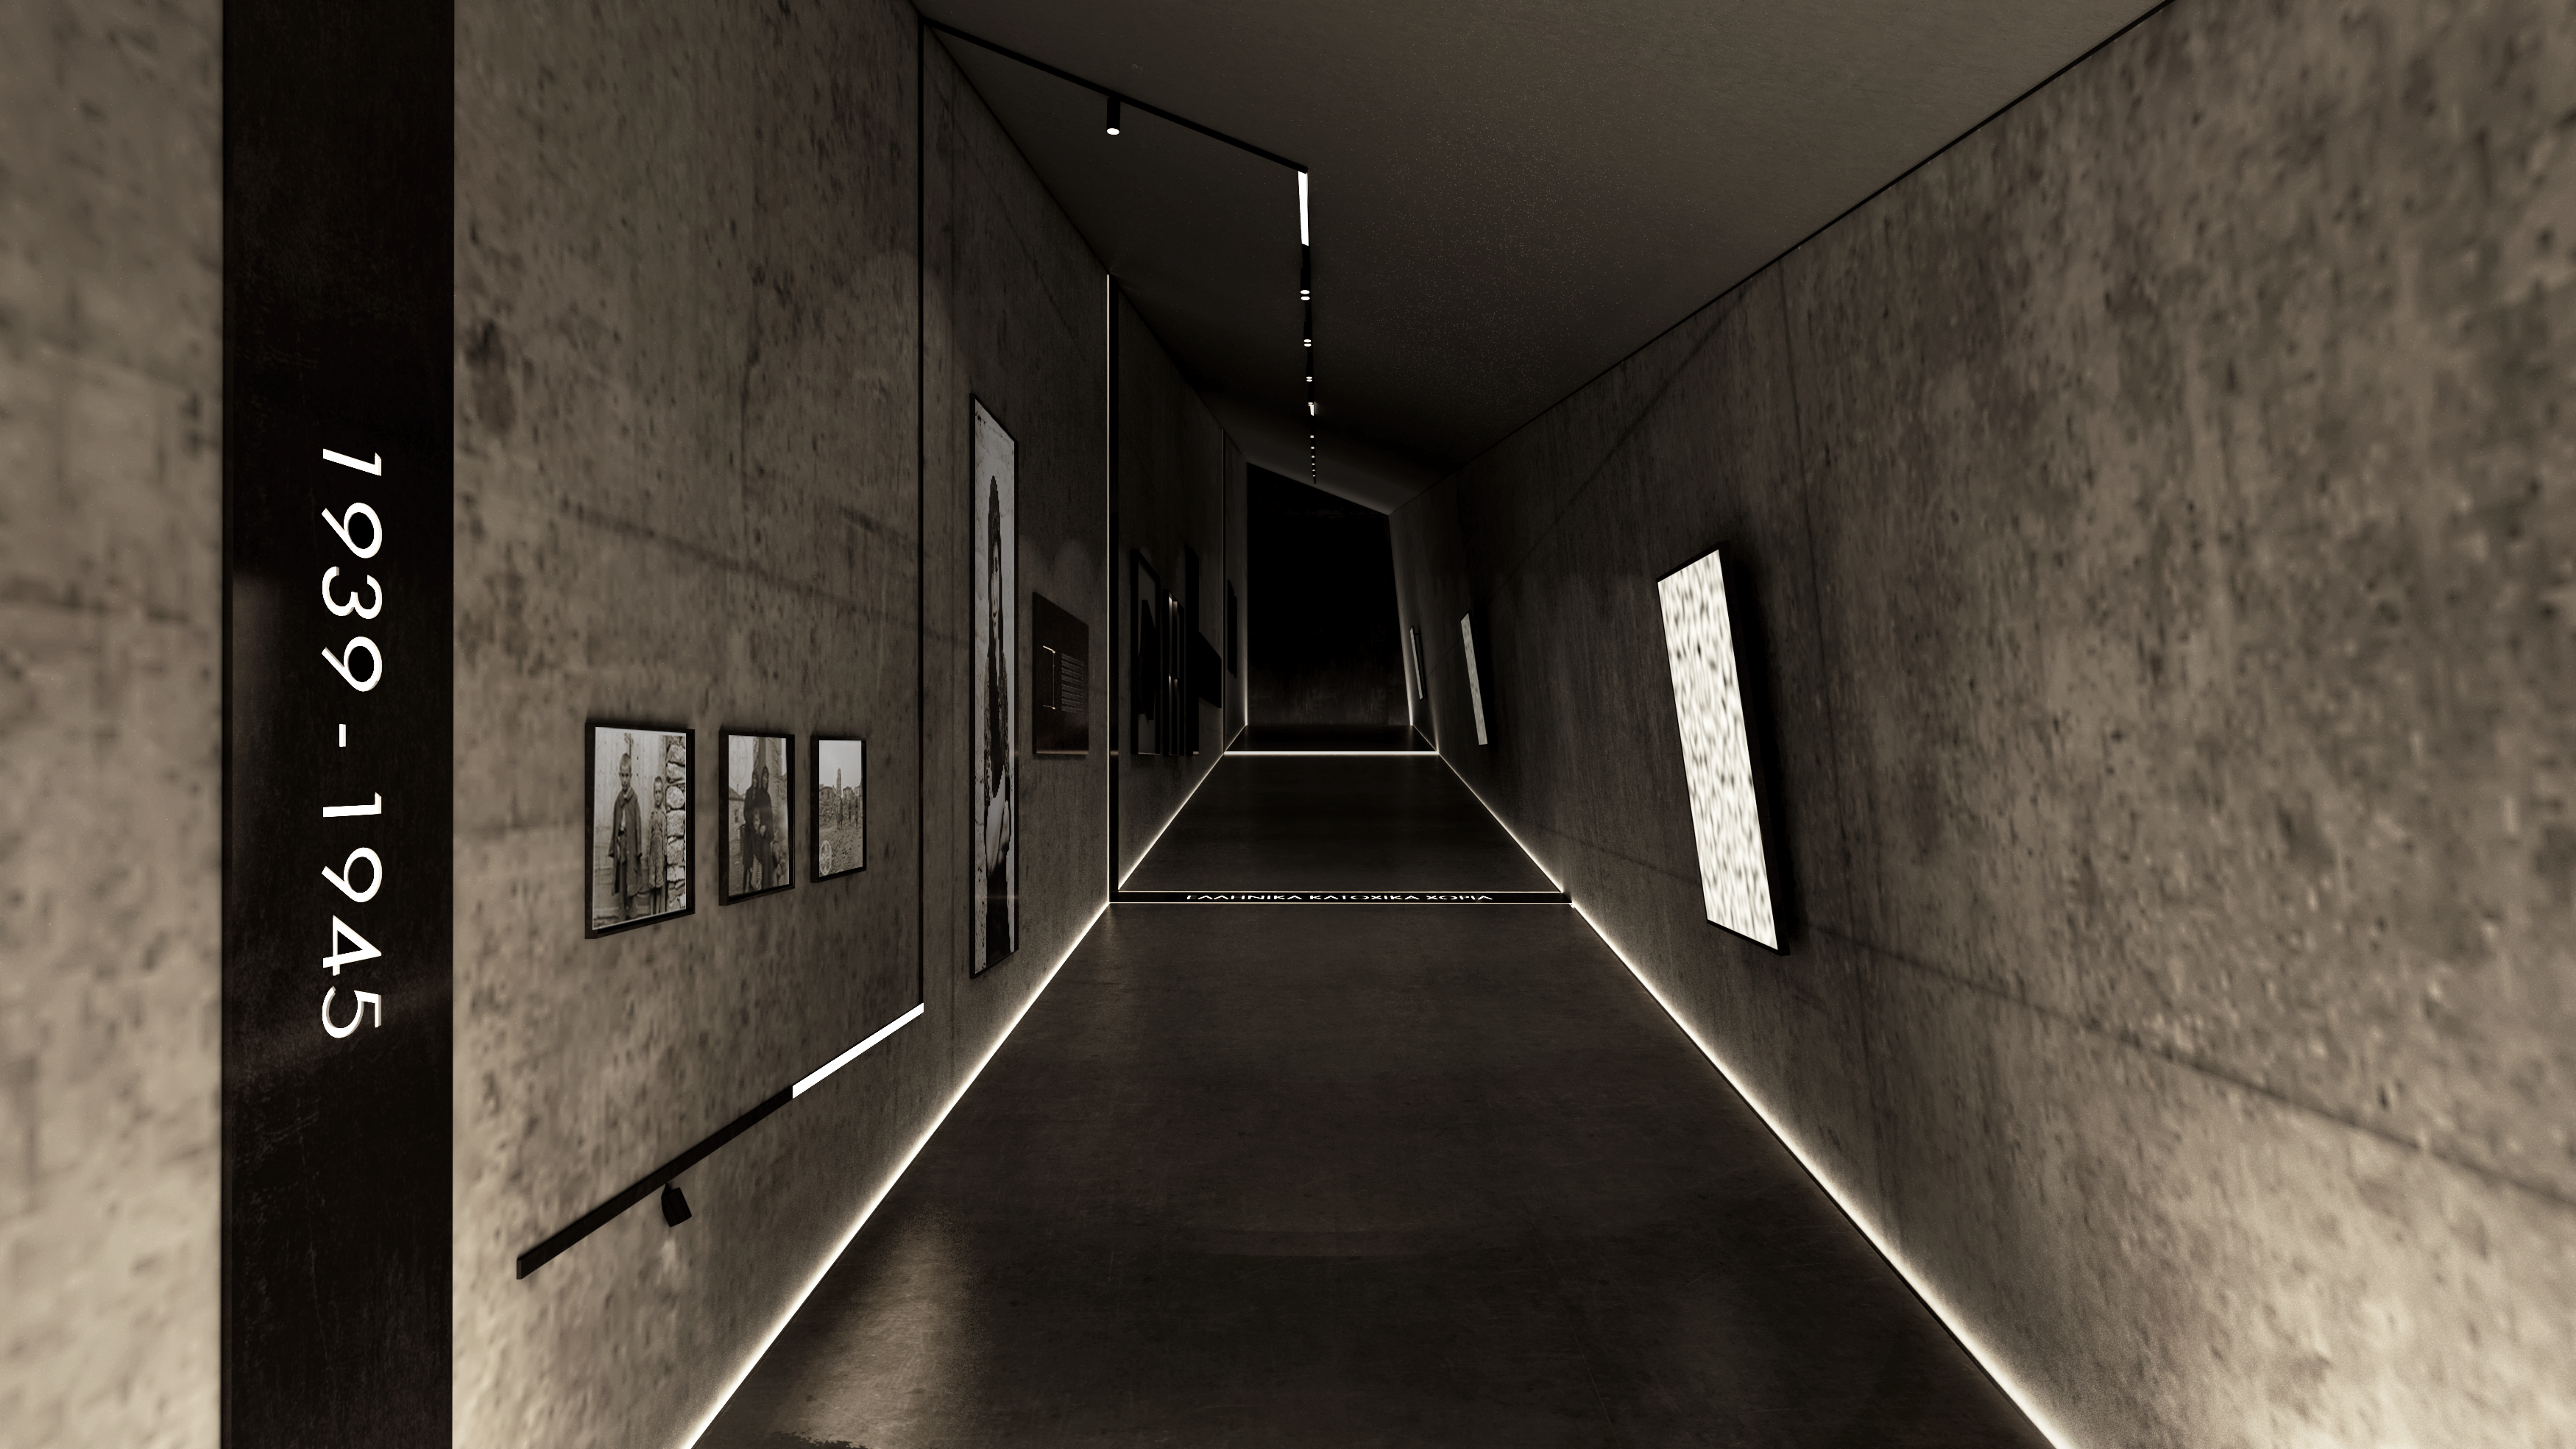 Archisearch Χαρακιά στο χρόνο: Mουσείο μνήμης θυμάτων ναζισμού στο Δίστομο | Διπλωματική εργασία Αργυροπούλου Ελισάβετ, Ζαράνη Αλεξάνδρα, Καραβάνη Ελεονώρα